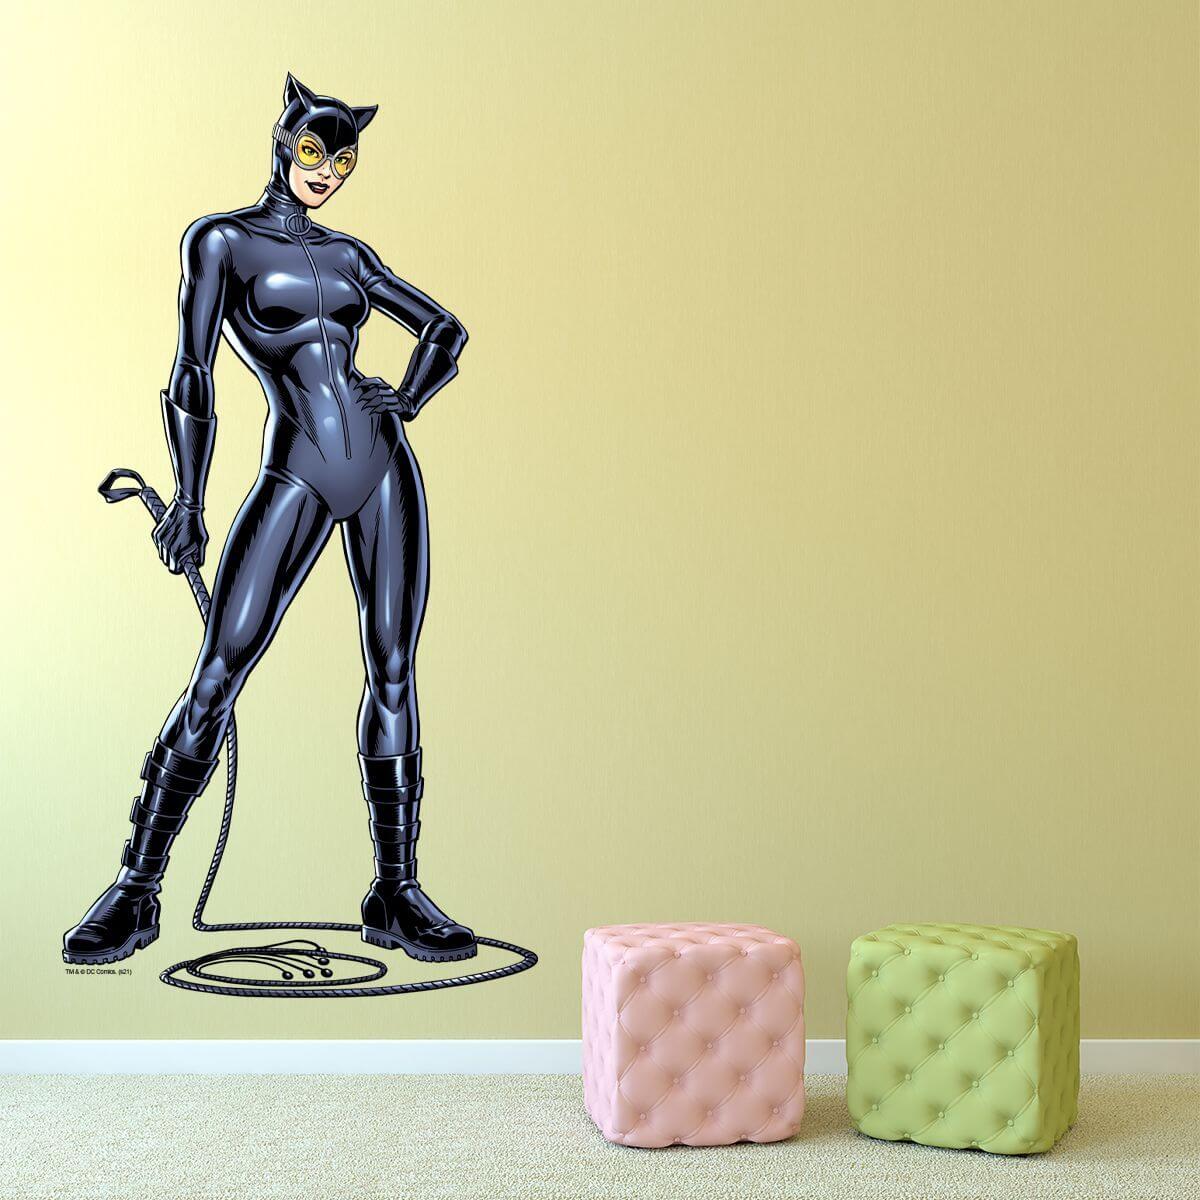 Kismet Decals Catwoman Vigilante Licensed Wall Sticker - Easy DIY Justice League Home & Room Decor Wall Art - Kismet Decals